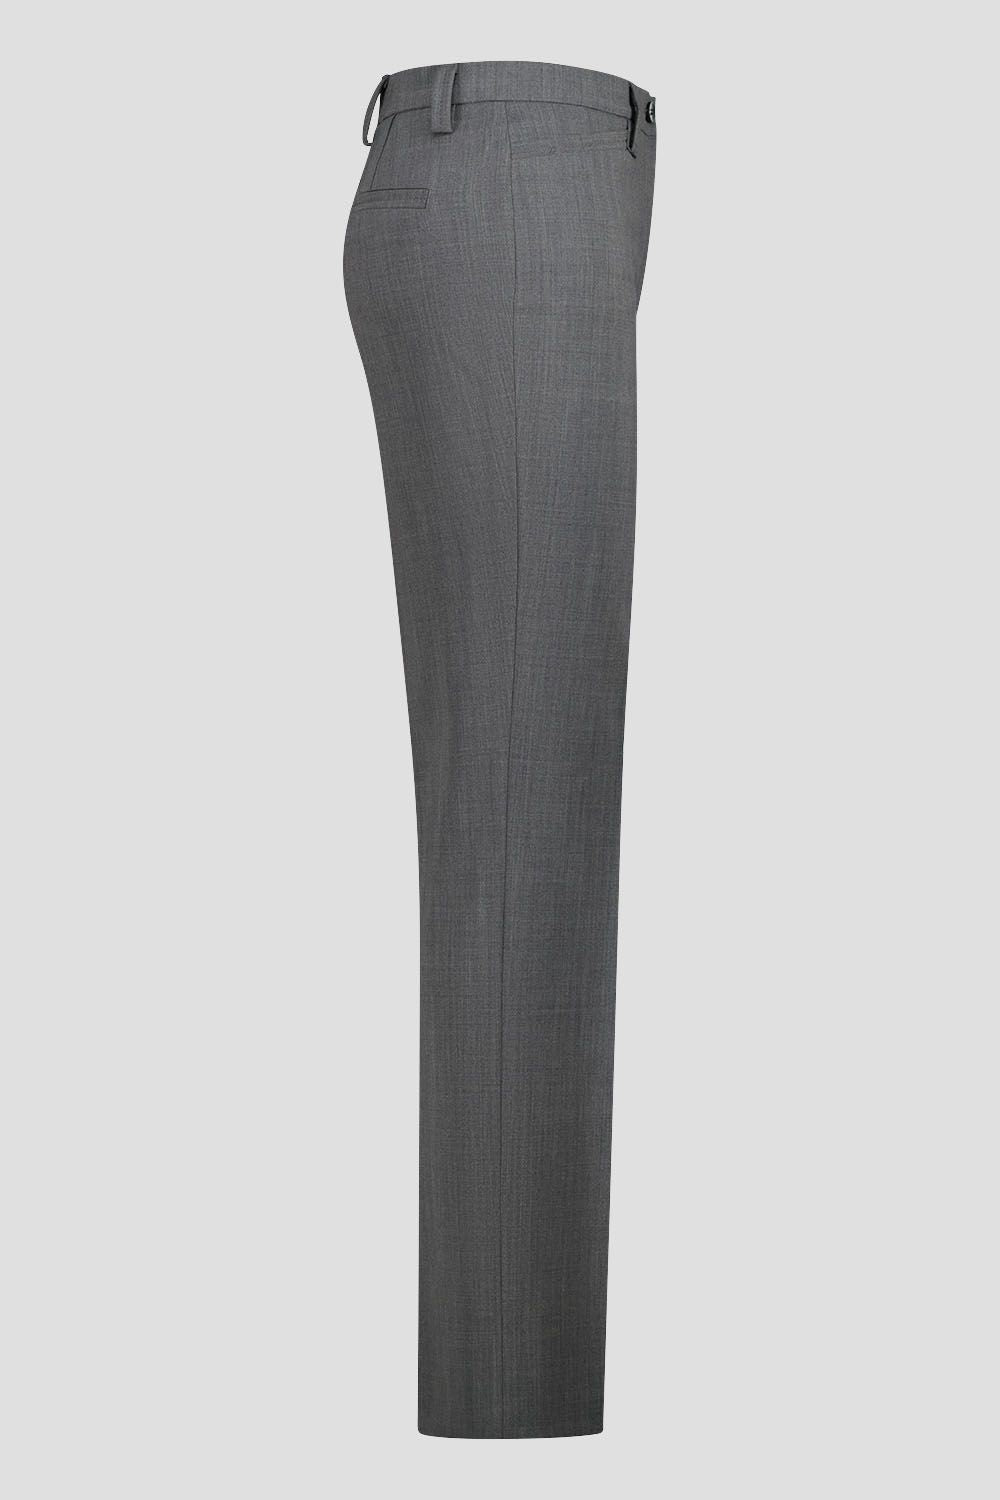 Side image of gardeur kayla dark grey trouser, seam down the side of the trouser